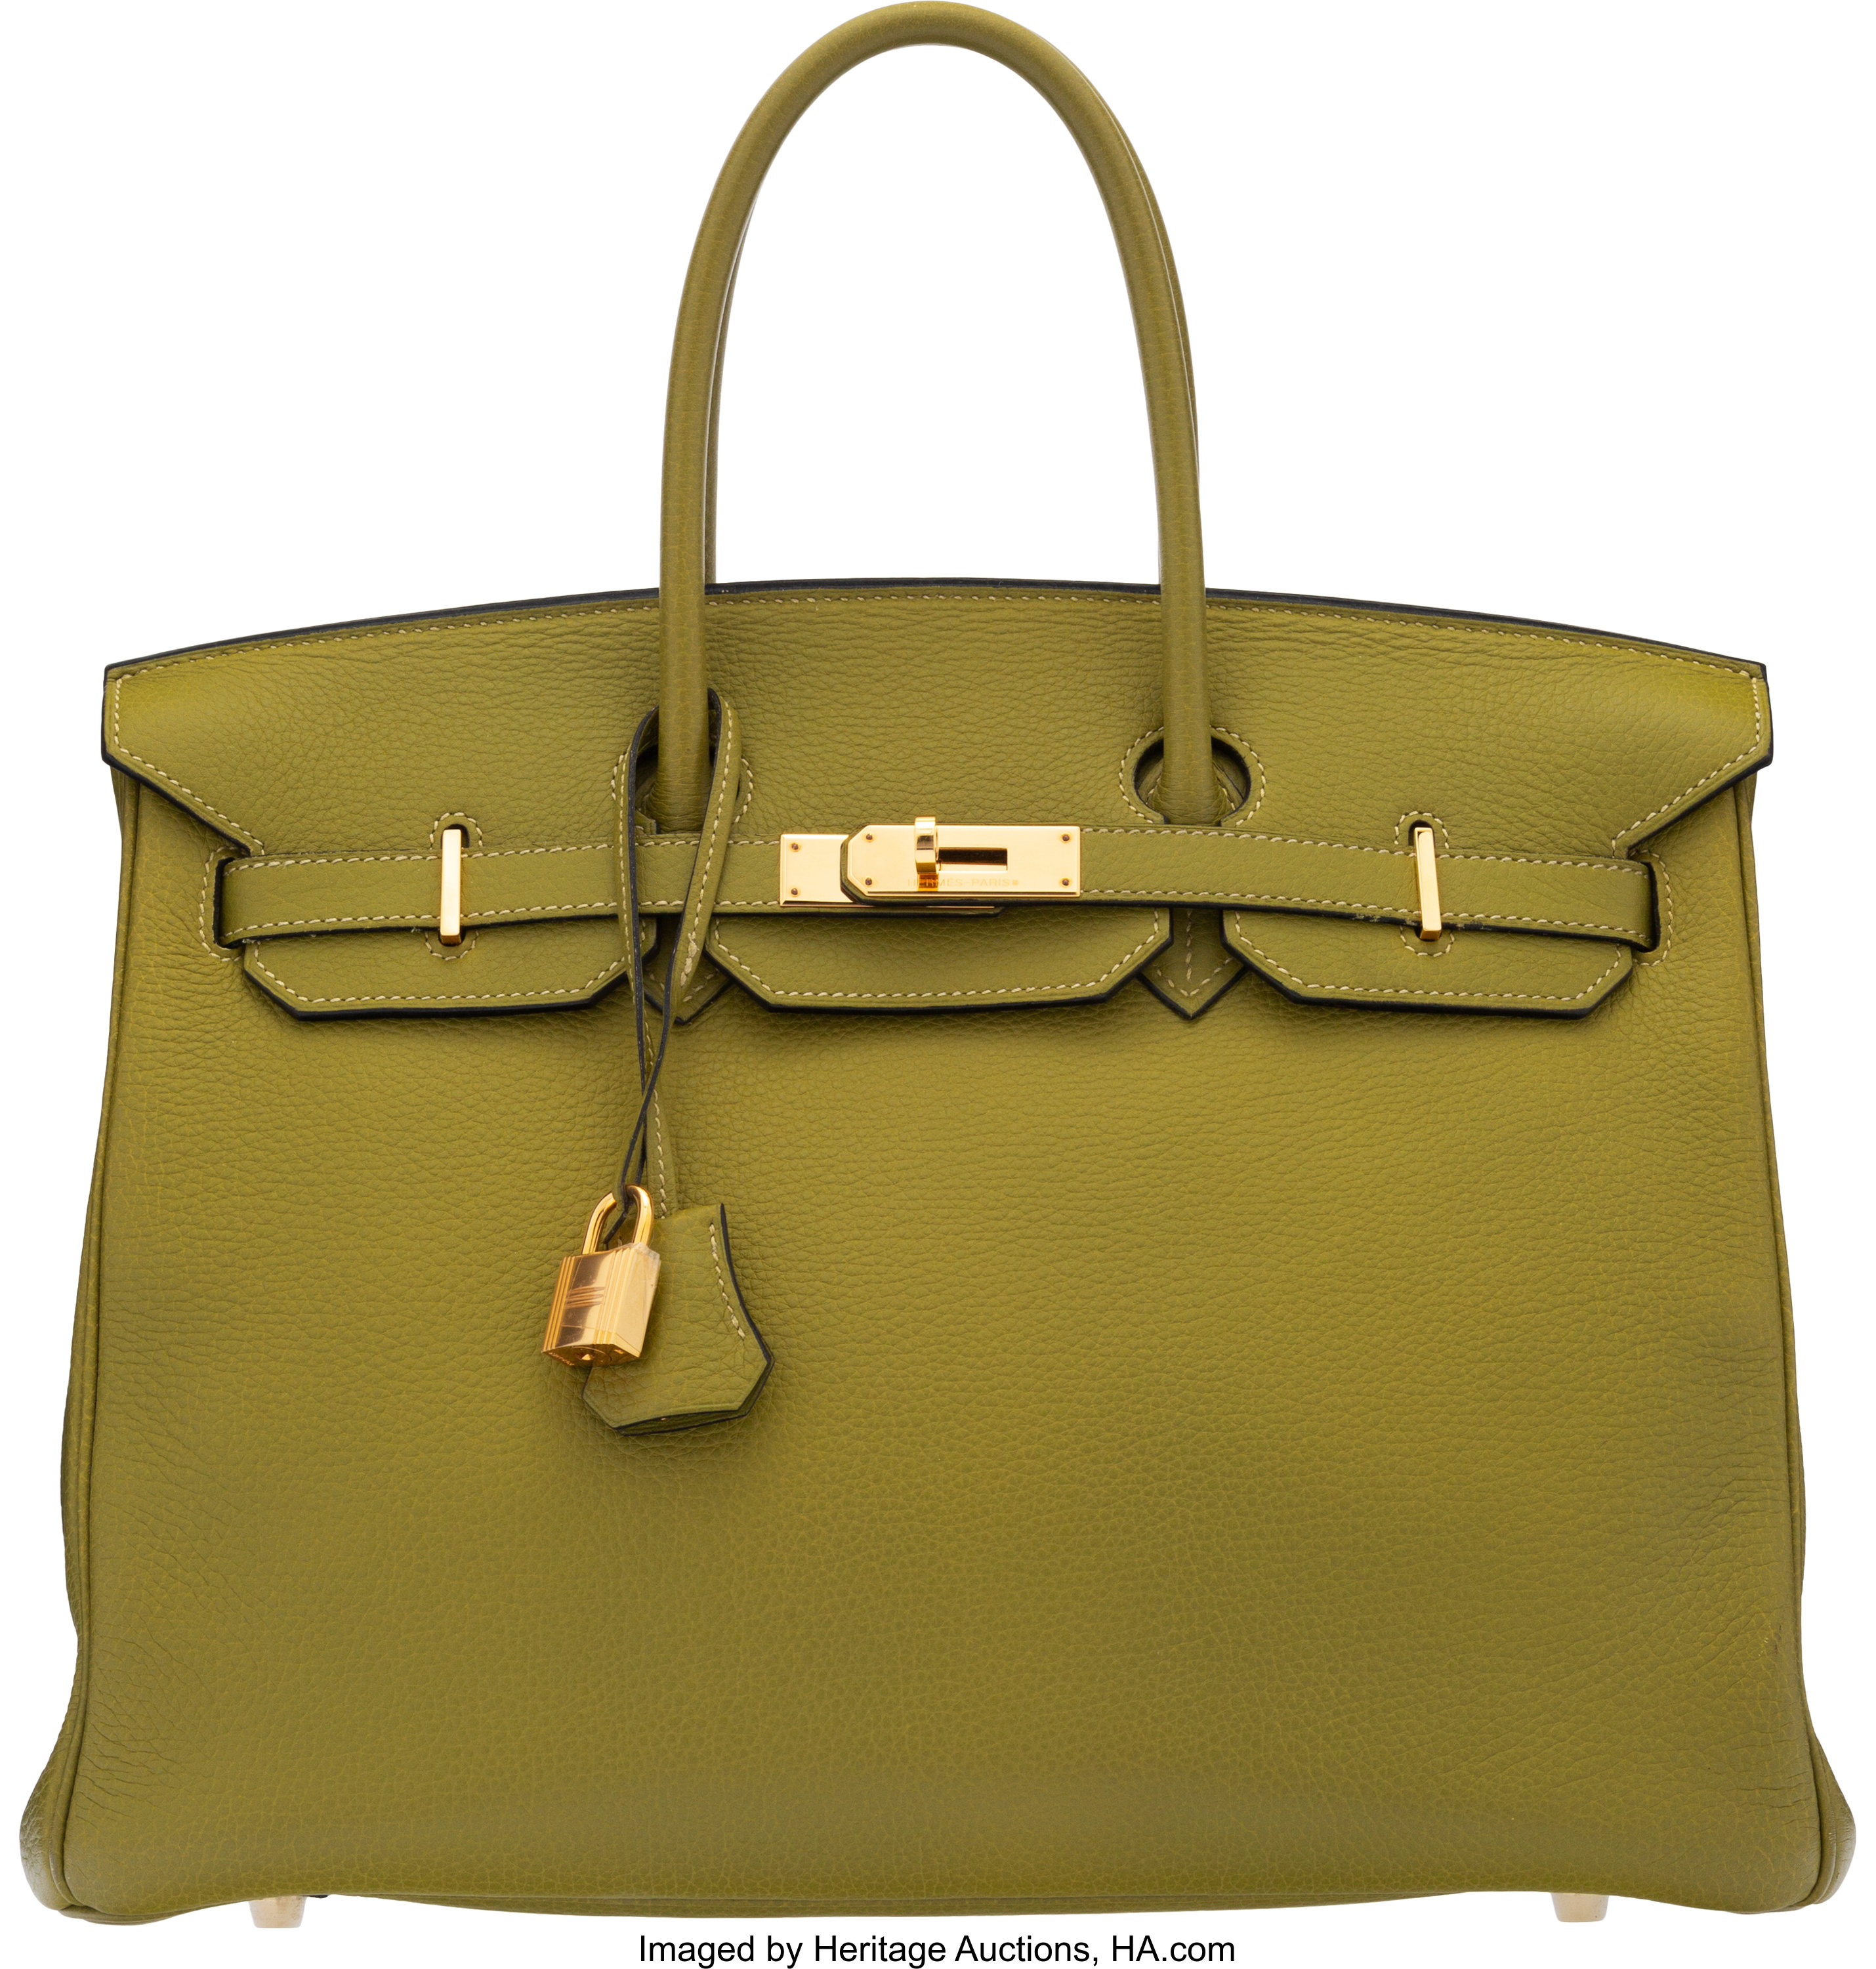 Hermès 35cm Vert Anis Togo Leather Birkin Bag with Gold Hardware. K ...